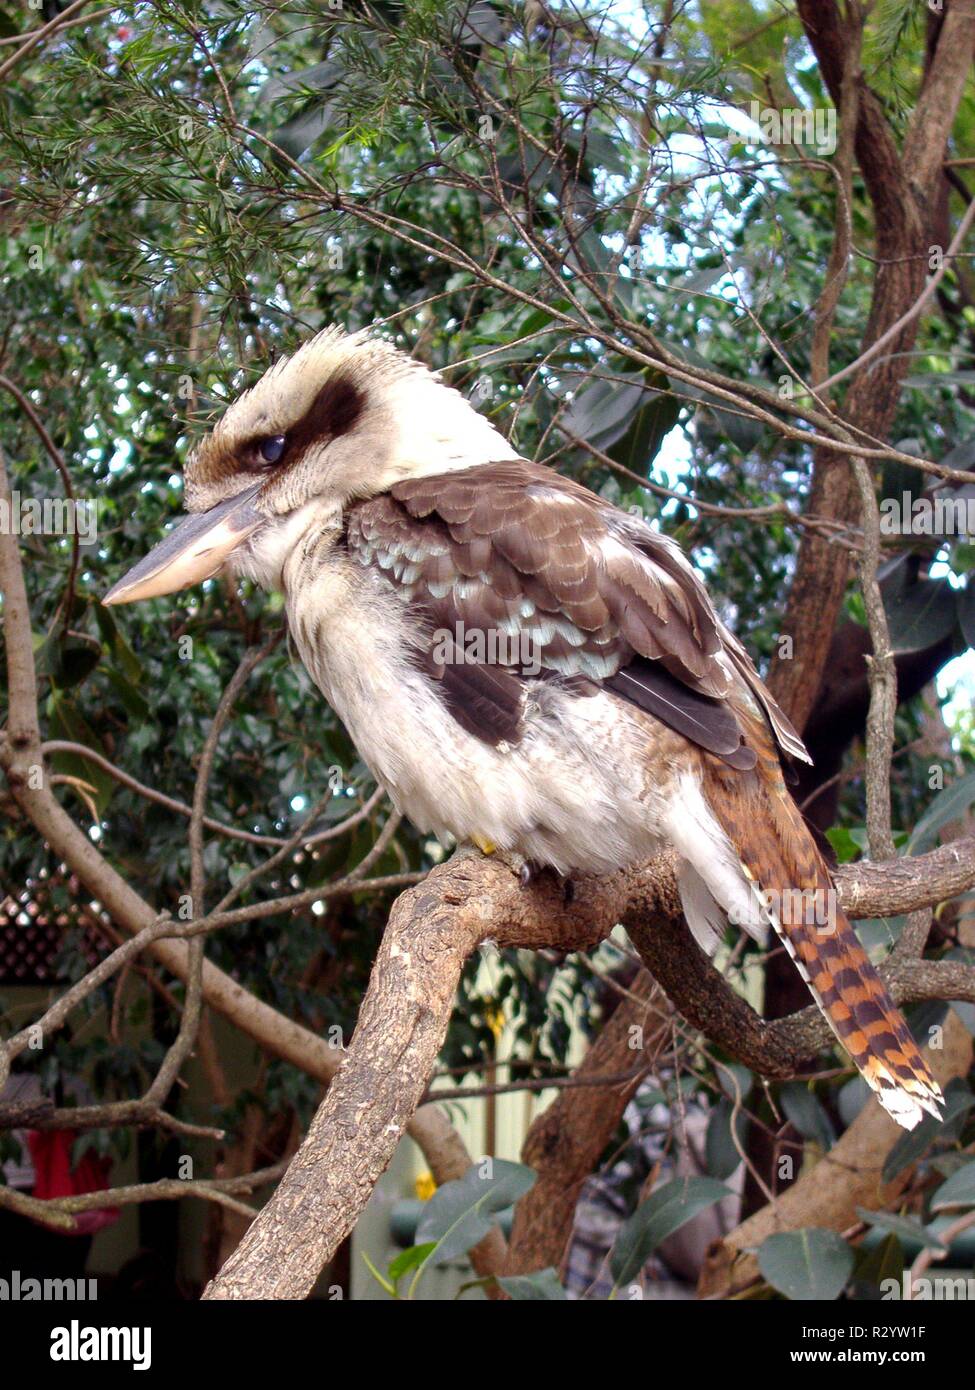 australian national bird - Alamy